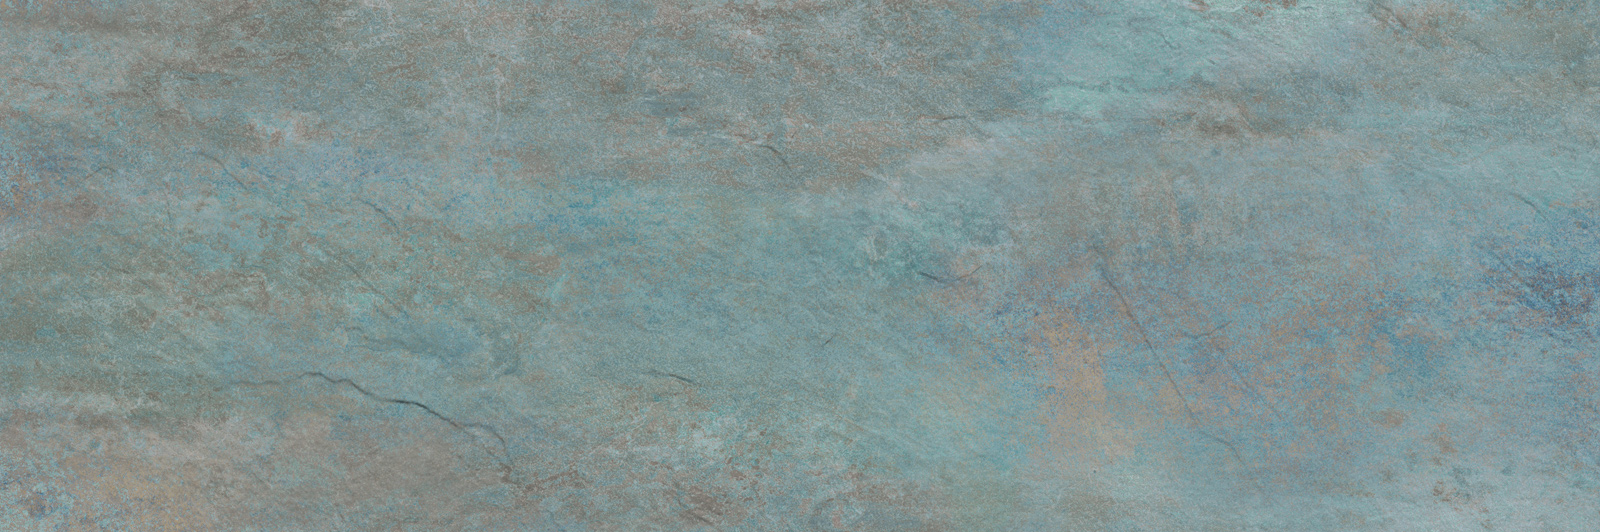 Настенная плитка Delacora Bryston Lagoon Sugar-эффект 24,6x74 настенная плитка delacora nebraska crema wt15nbr01r 24 6x74